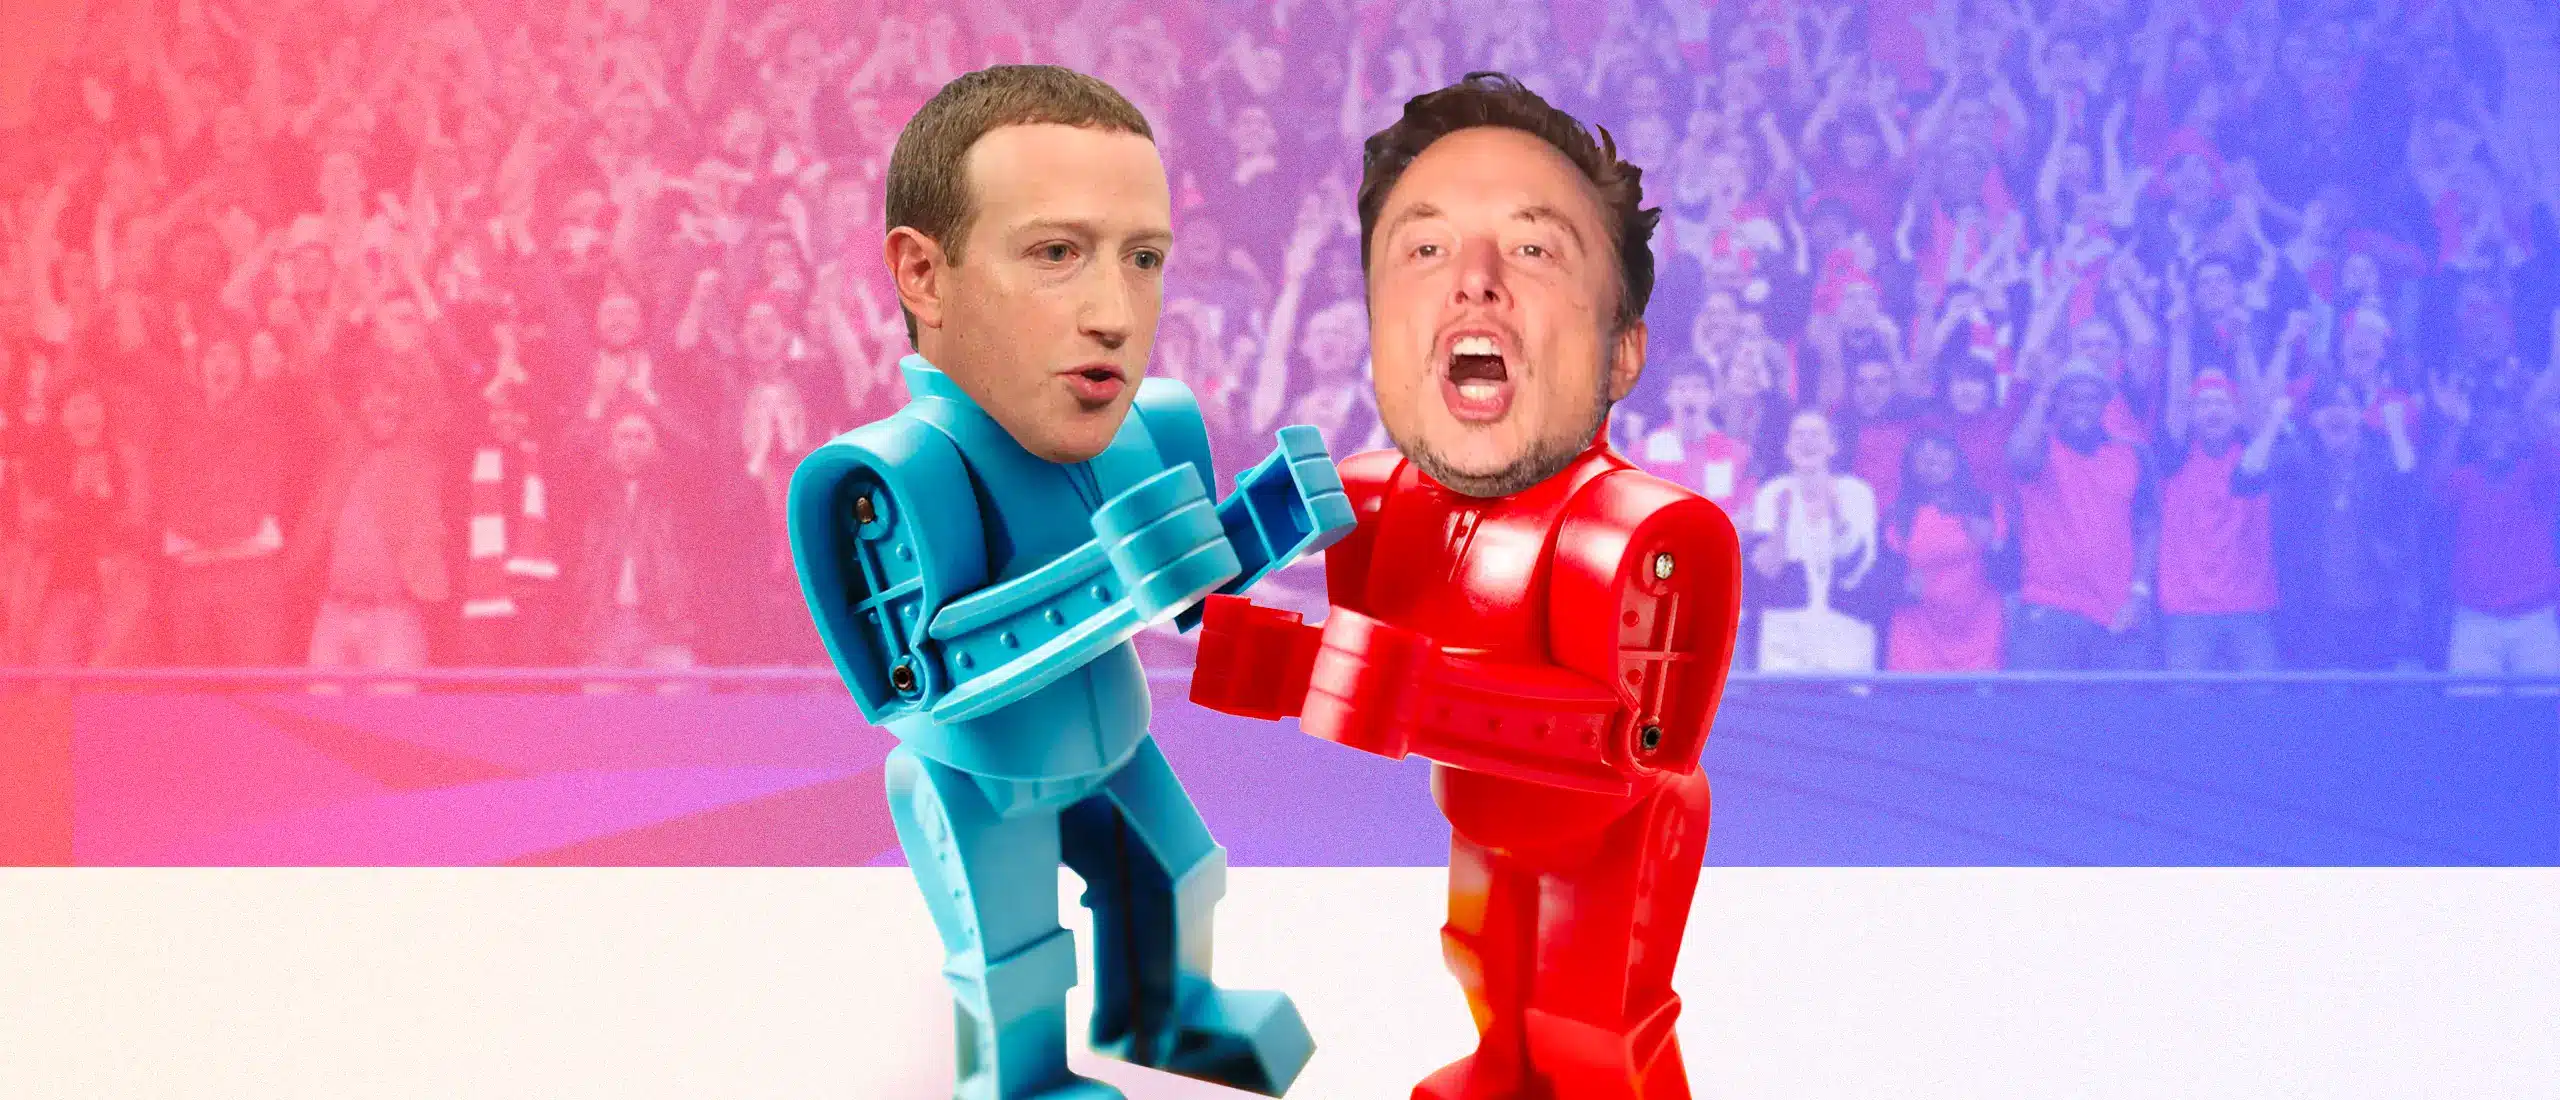 Robot versions of Mark Zuckerberg and Elon Musk boxing